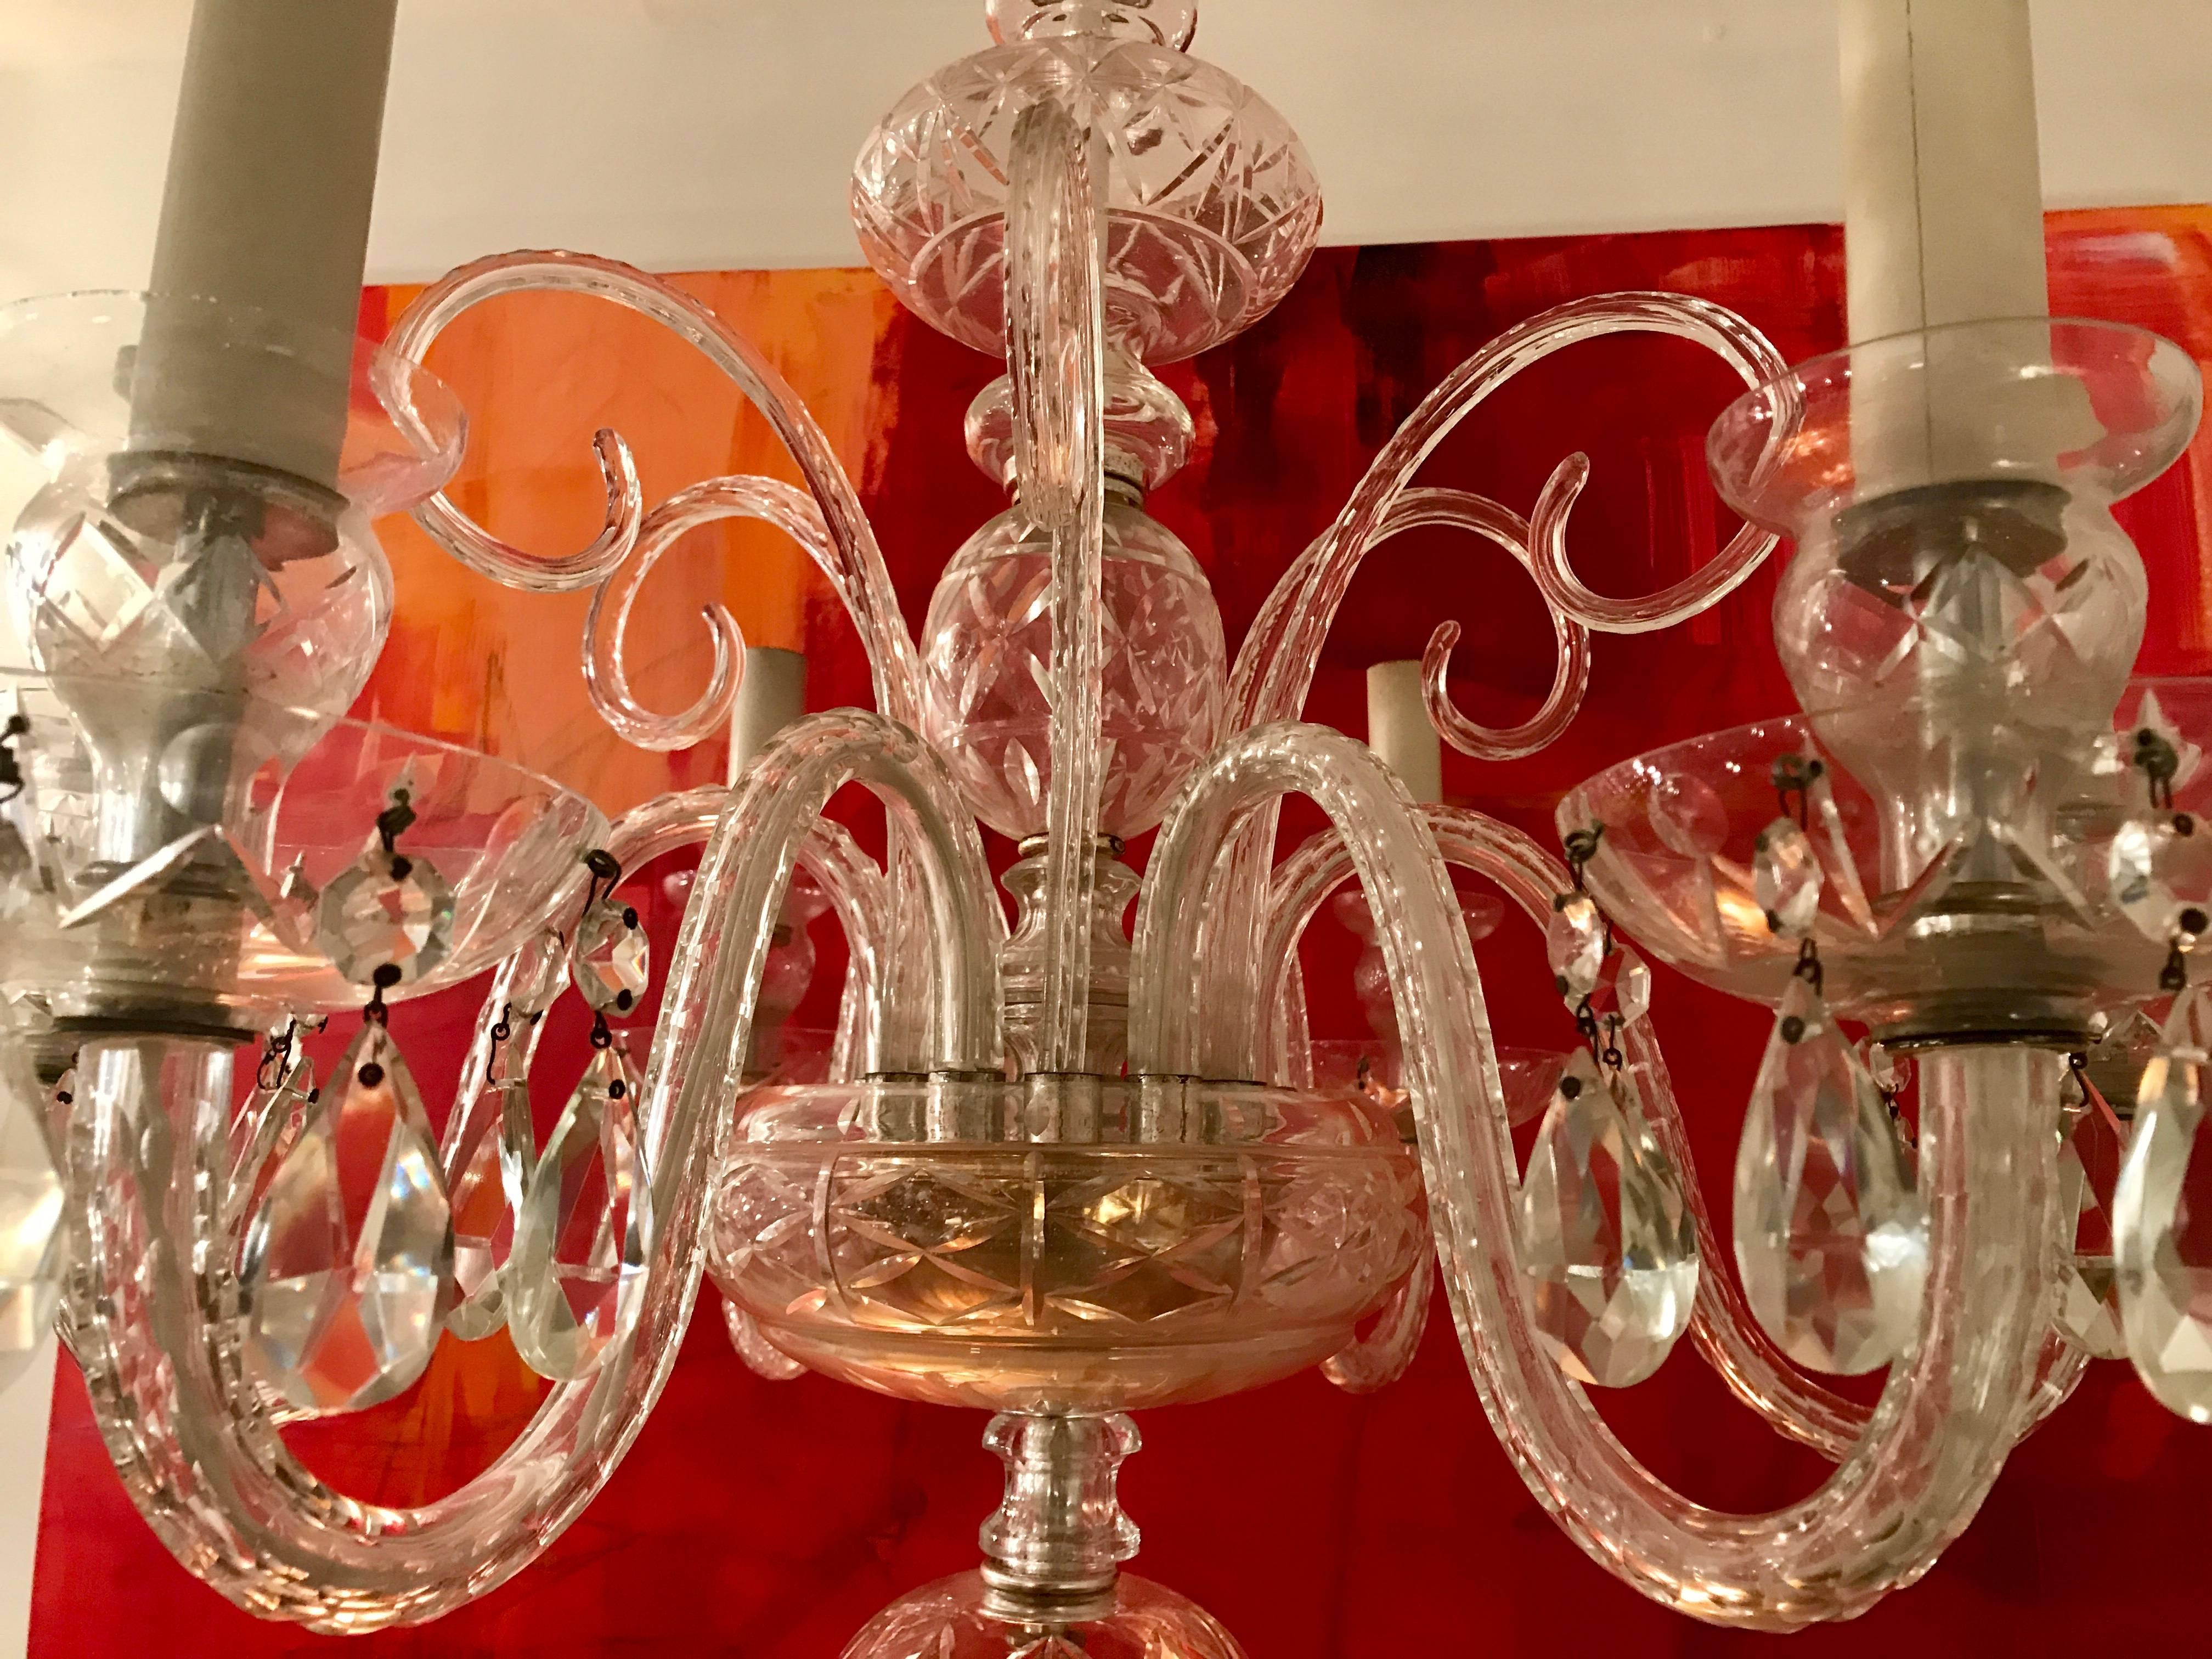 Beautiful six-light Venetian glass chandelier, hand blown decorative stems, early 20th century, Italy.